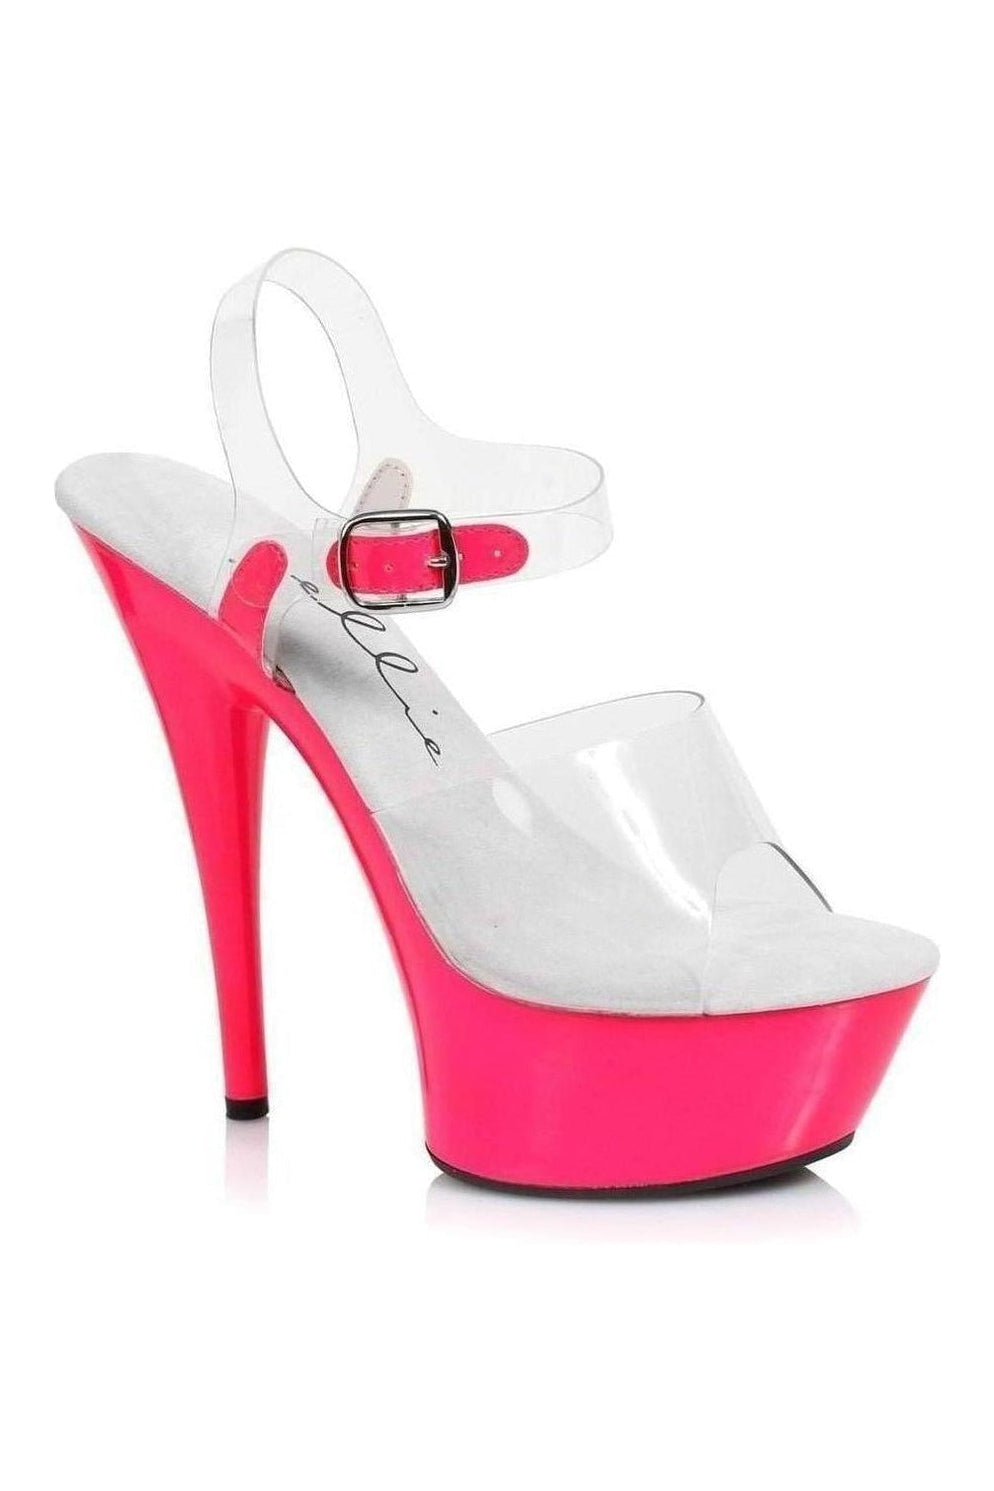 609-ROXY Platform Sandal | Fuchsia Patent-Ellie Shoes-Fuchsia-Sandals-SEXYSHOES.COM